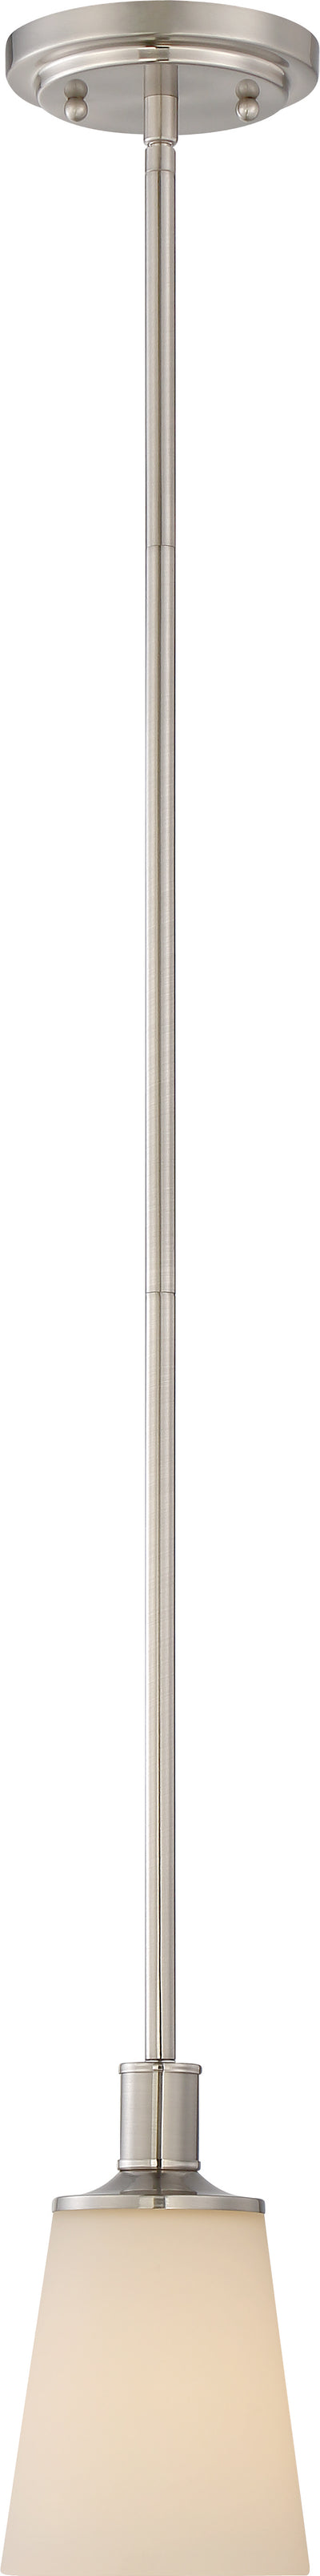 Nuvo Lighting 60/5828 Laguna 1 Light Mini Pendant with White Glass